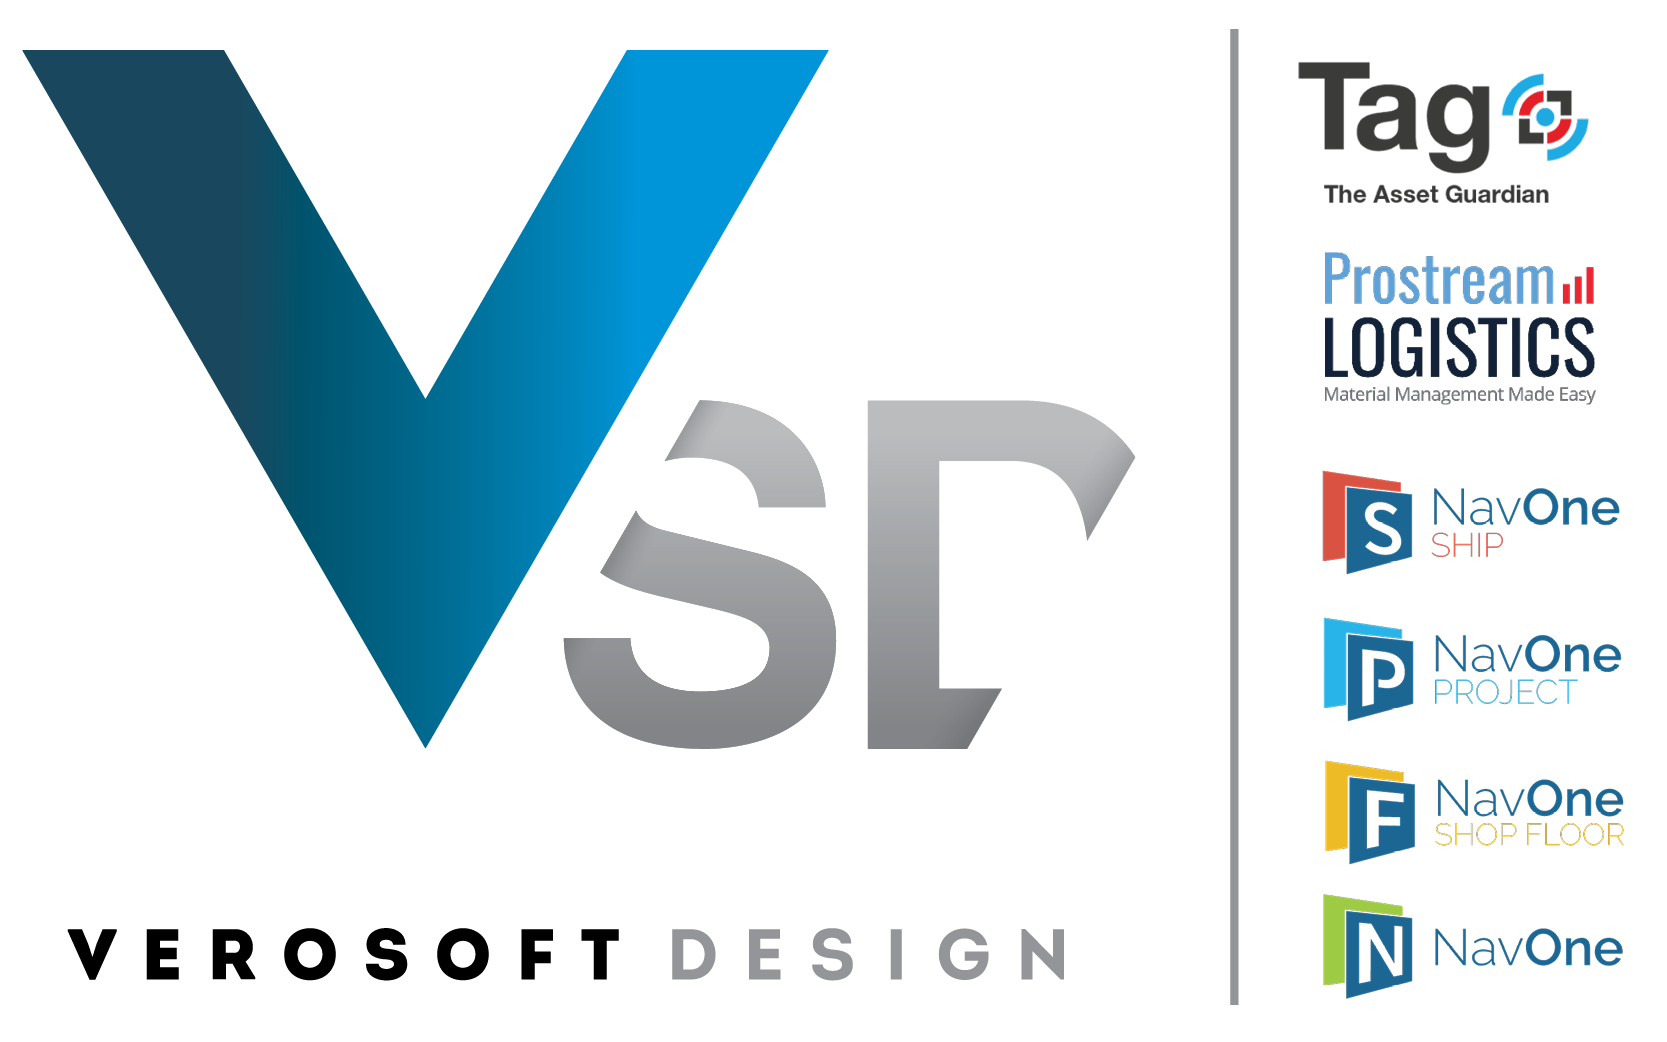 VeroSoft Design solutions